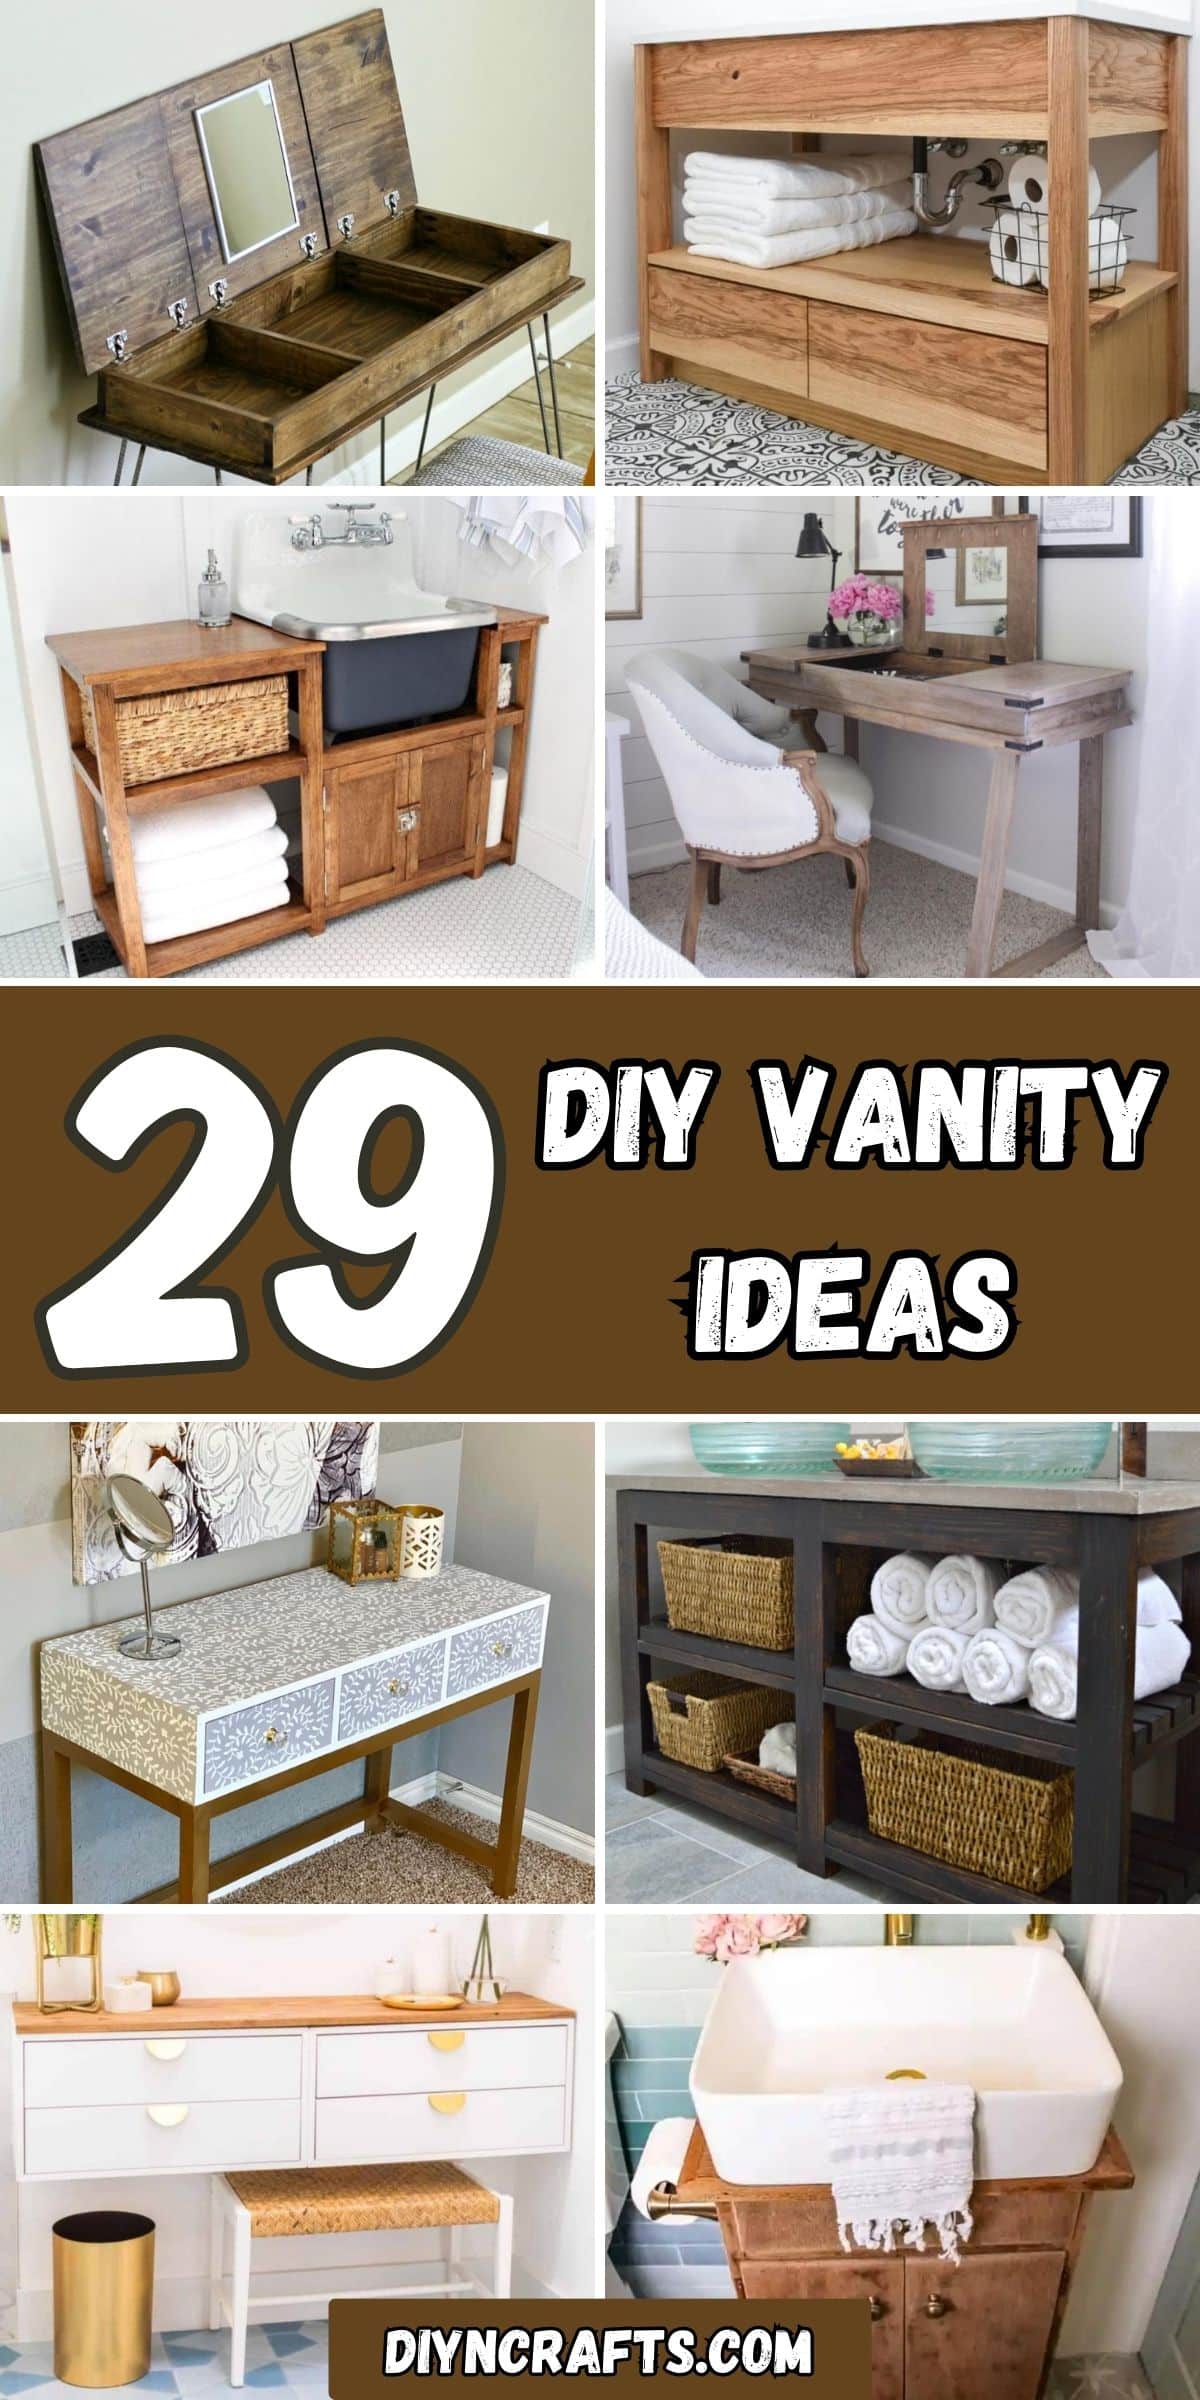 29 DIY Vanity Ideas collage.